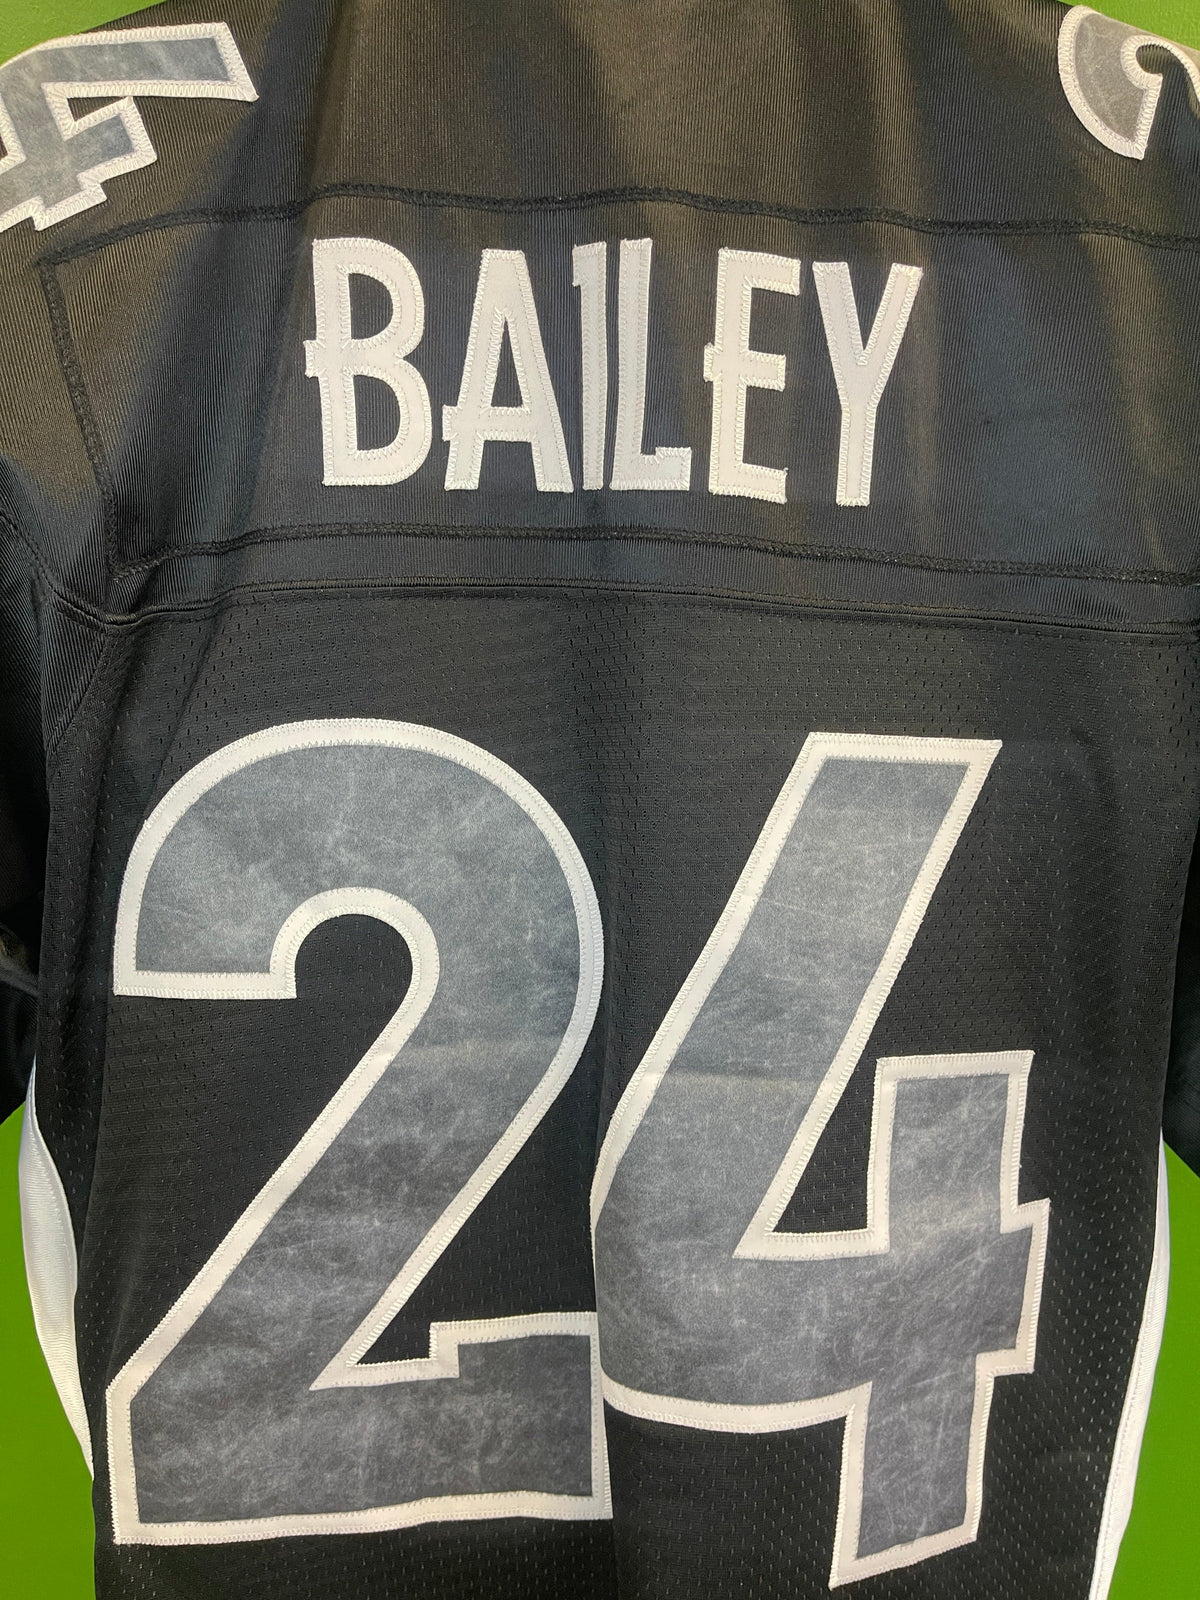 NFL Denver Broncos Champ Bailey #24 Black Greyscale Stitched Jersey Men's Medium